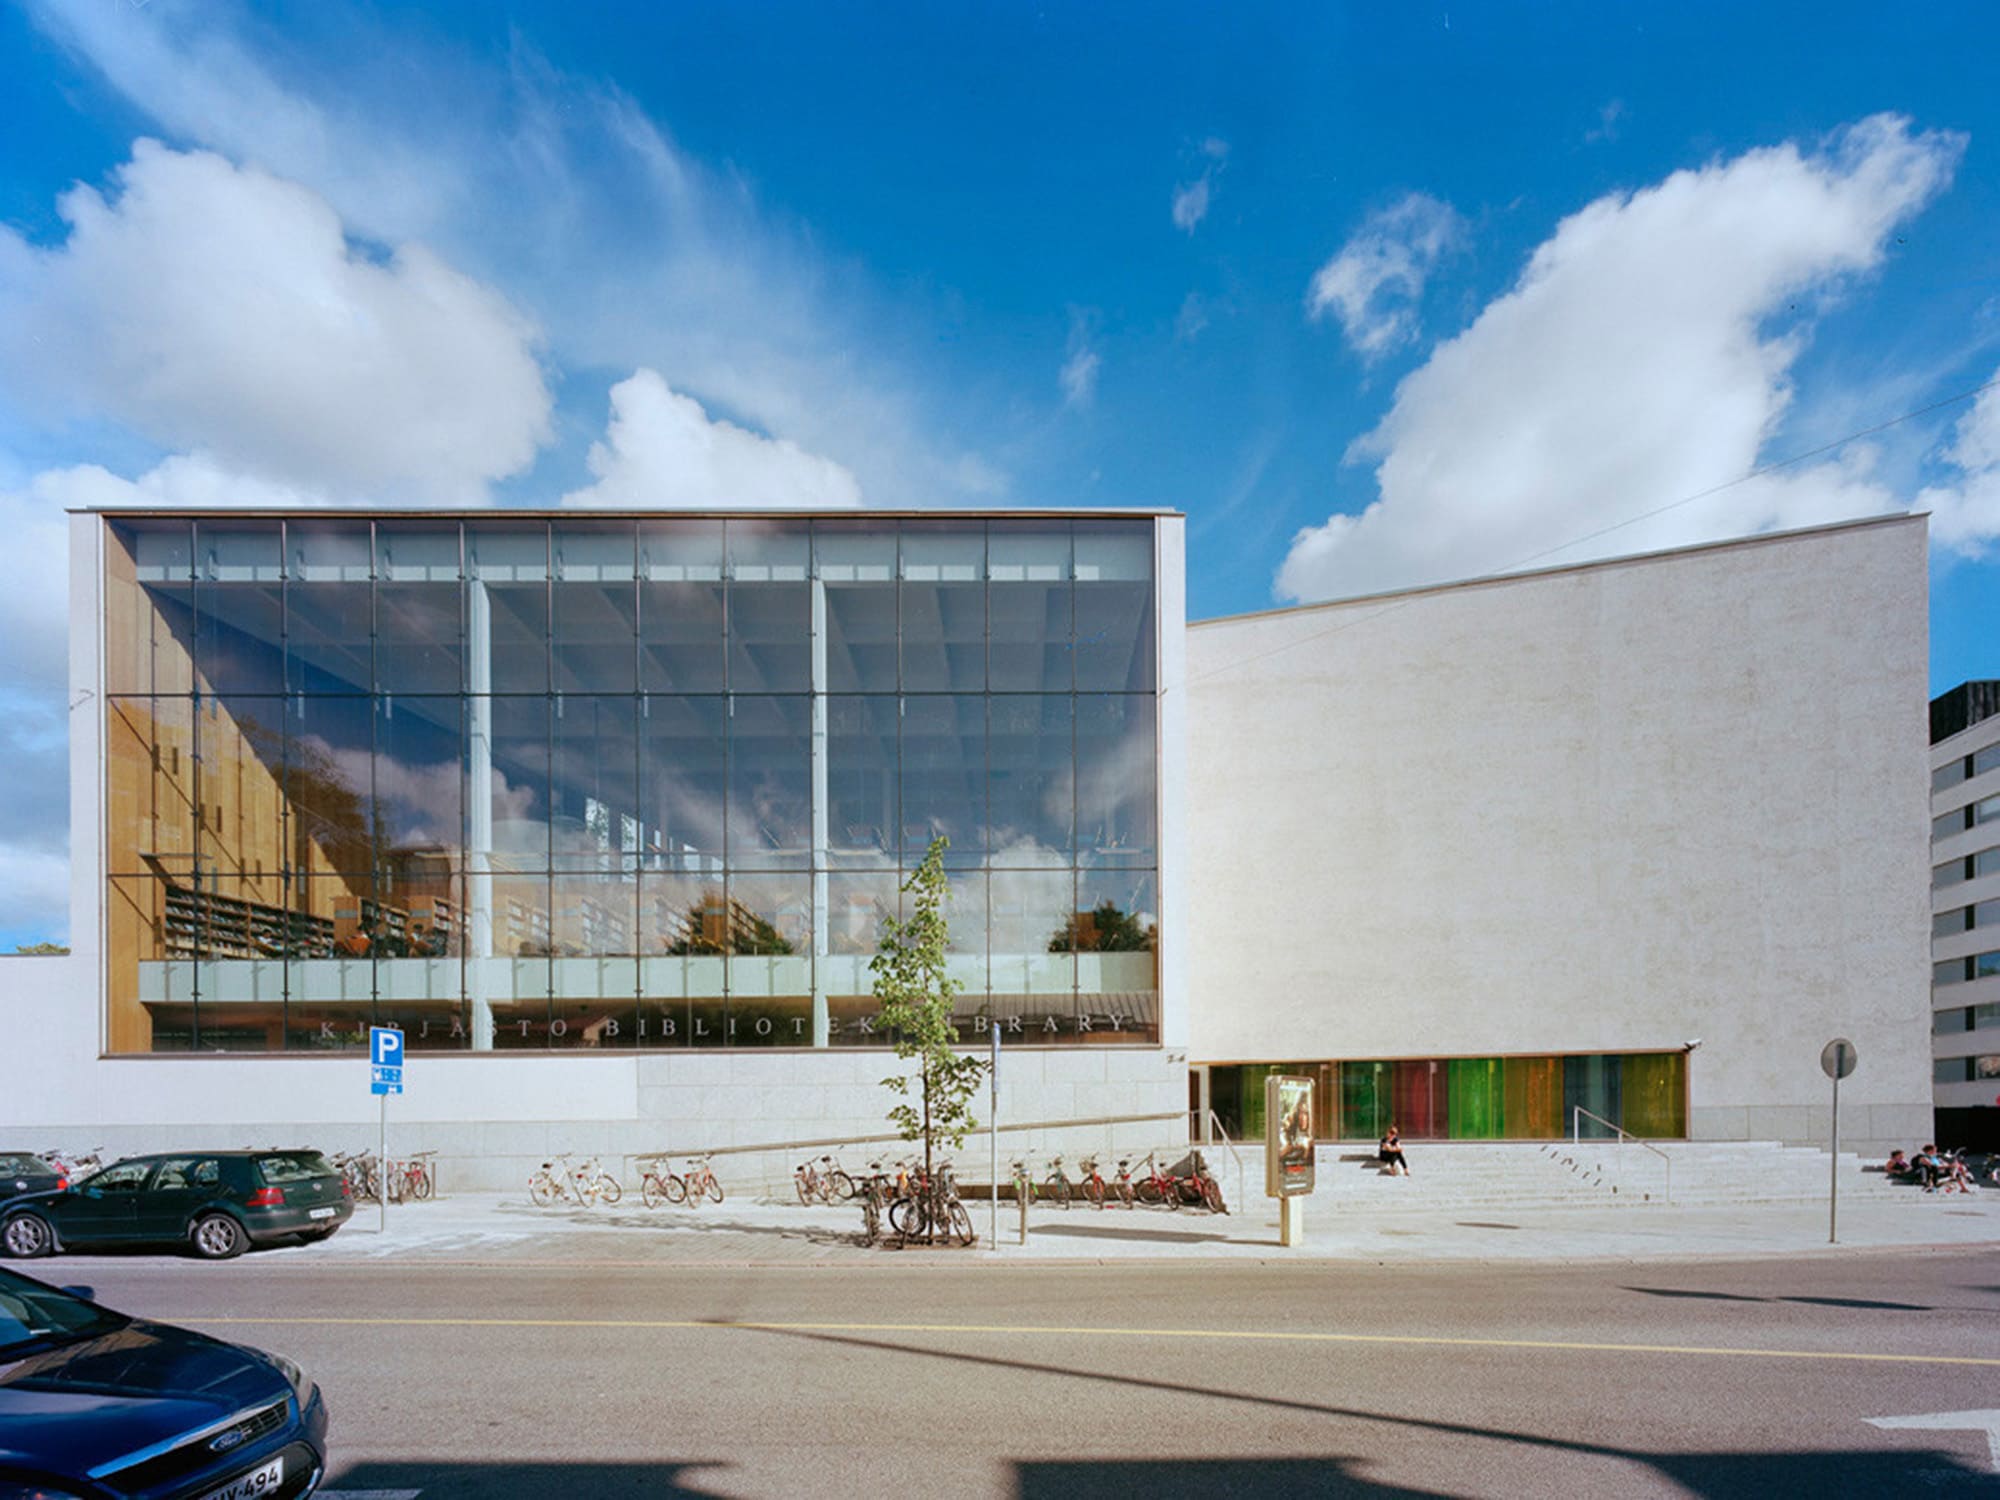 City Library Turku